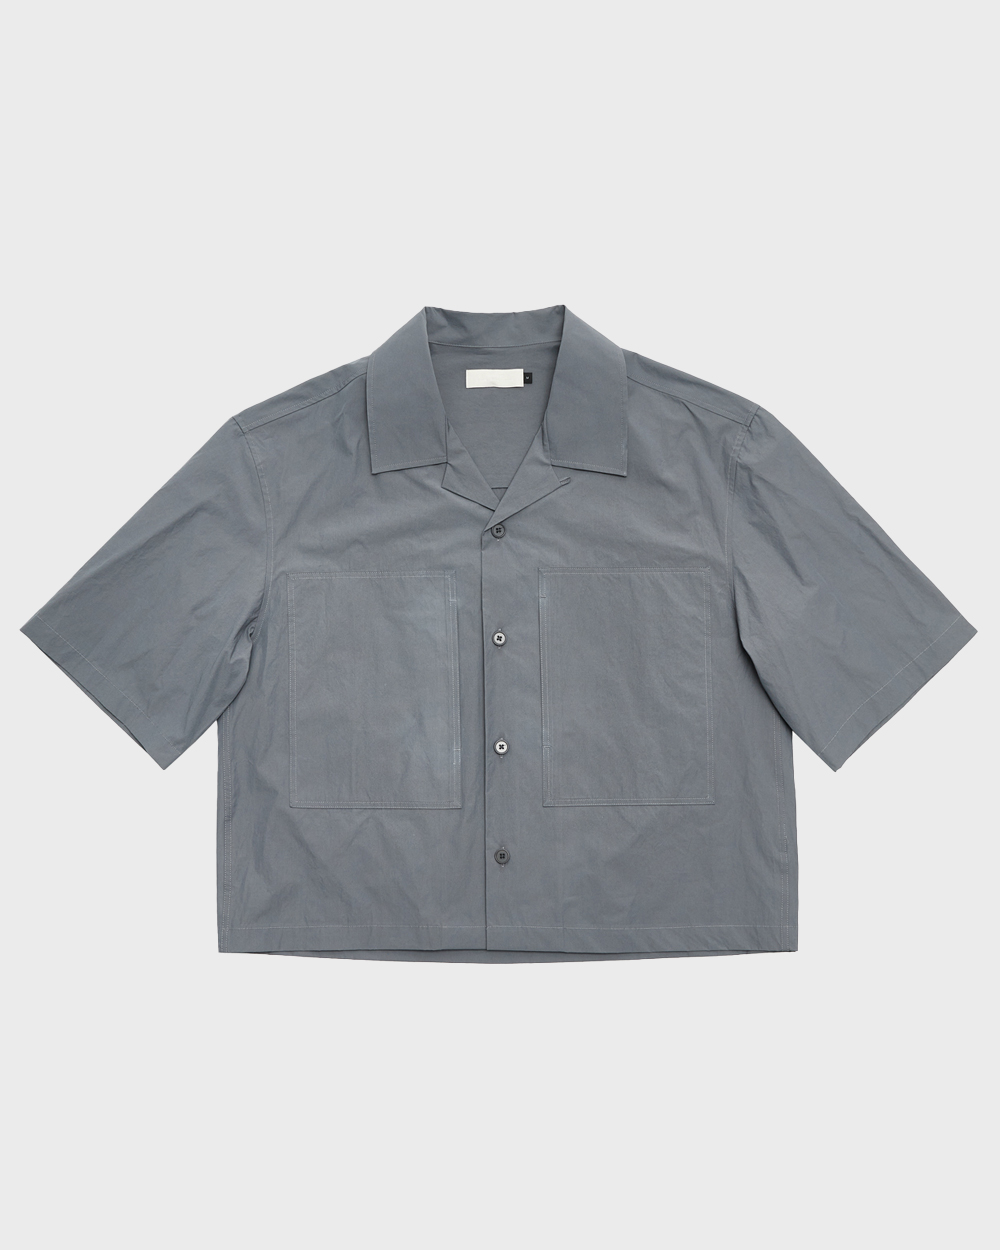 Pocket Half Shirts (Charcoal)